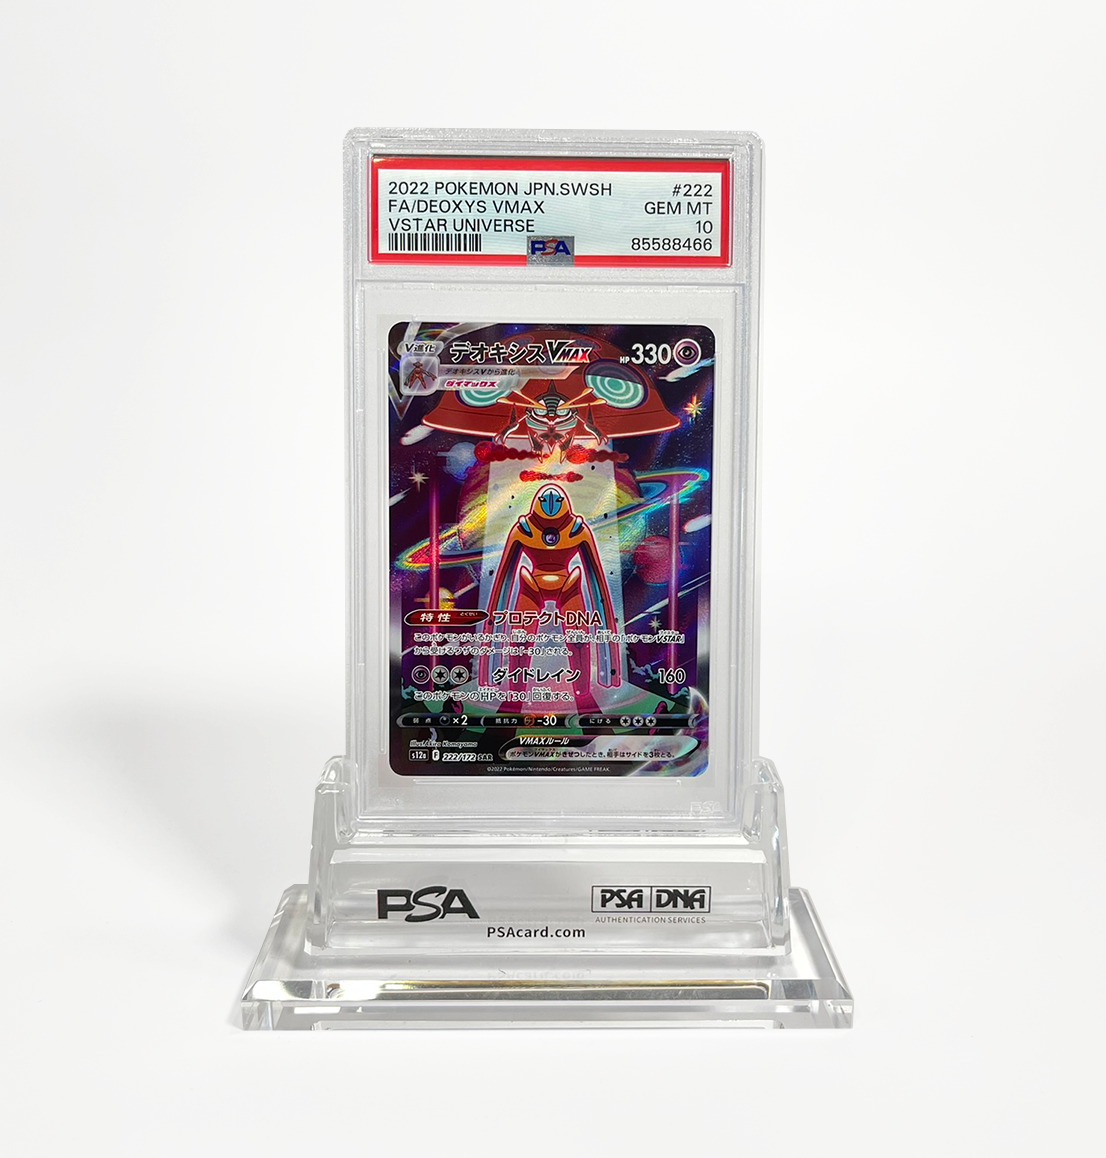 PSA 10 Deoxys VMAX #222 Vstar Universe Japanese Pokemon card